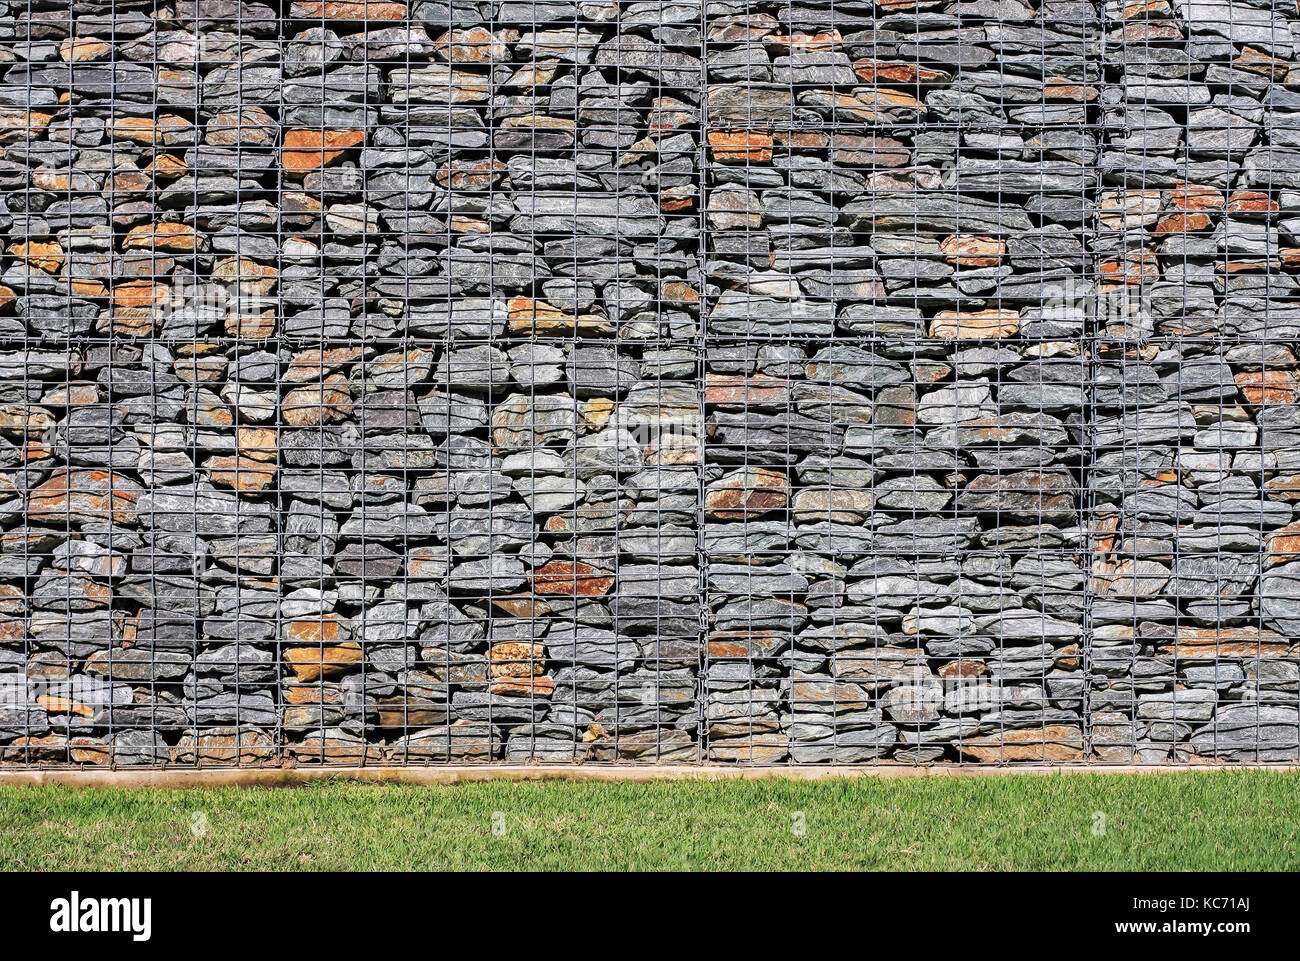 B-Ware gabione 100x30x40 cm steingabione cesta de piedra del muro de muro de alambre cesta banco